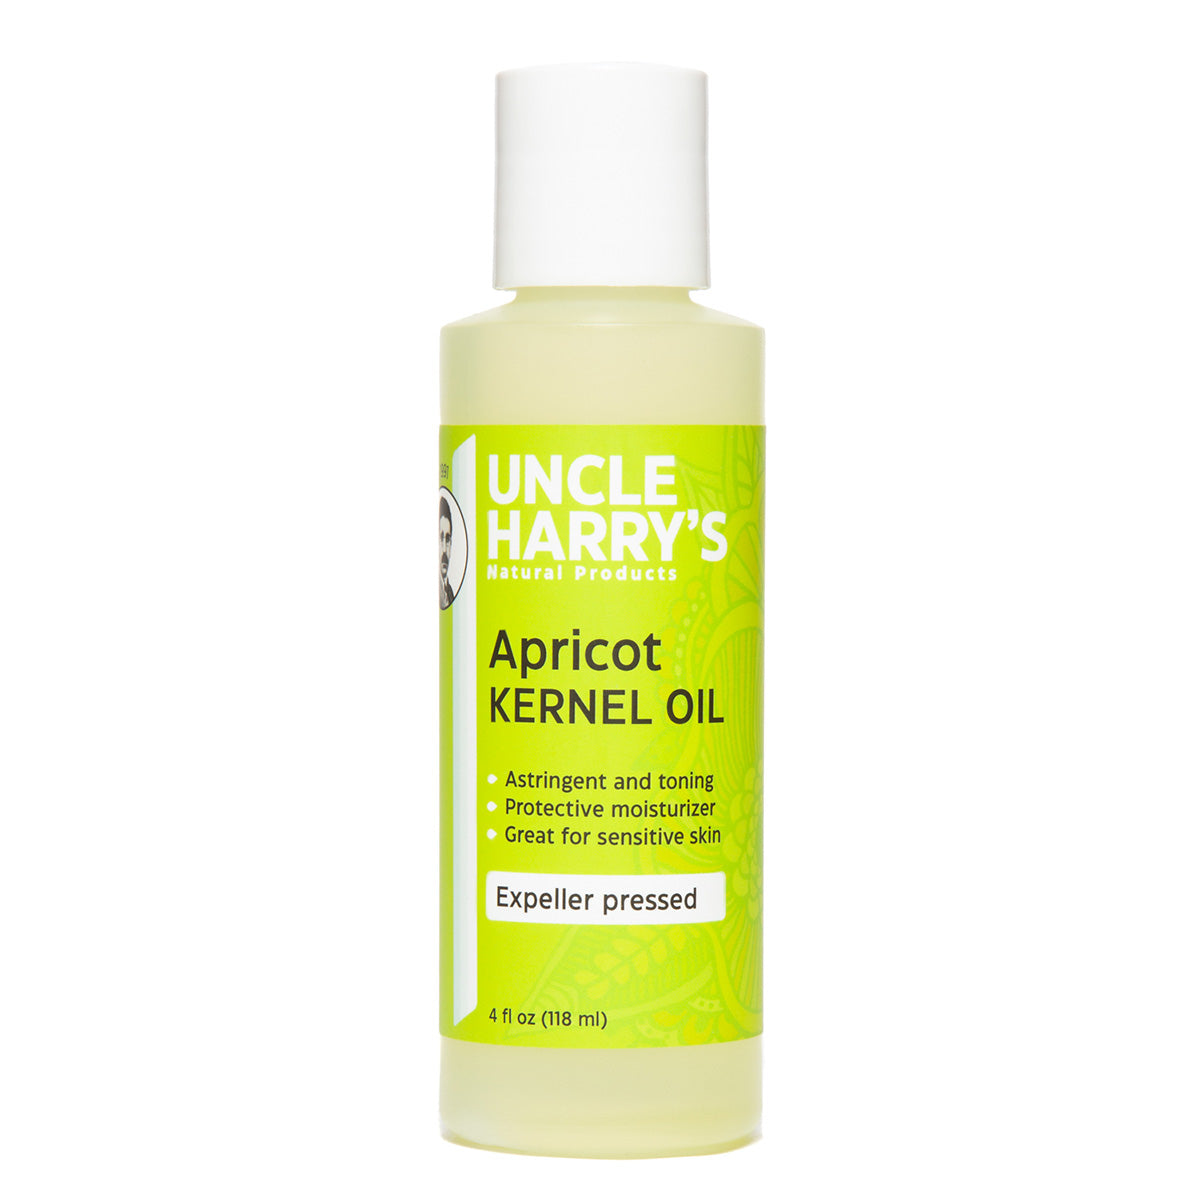 Apricot Kernel Oil 4 fl oz